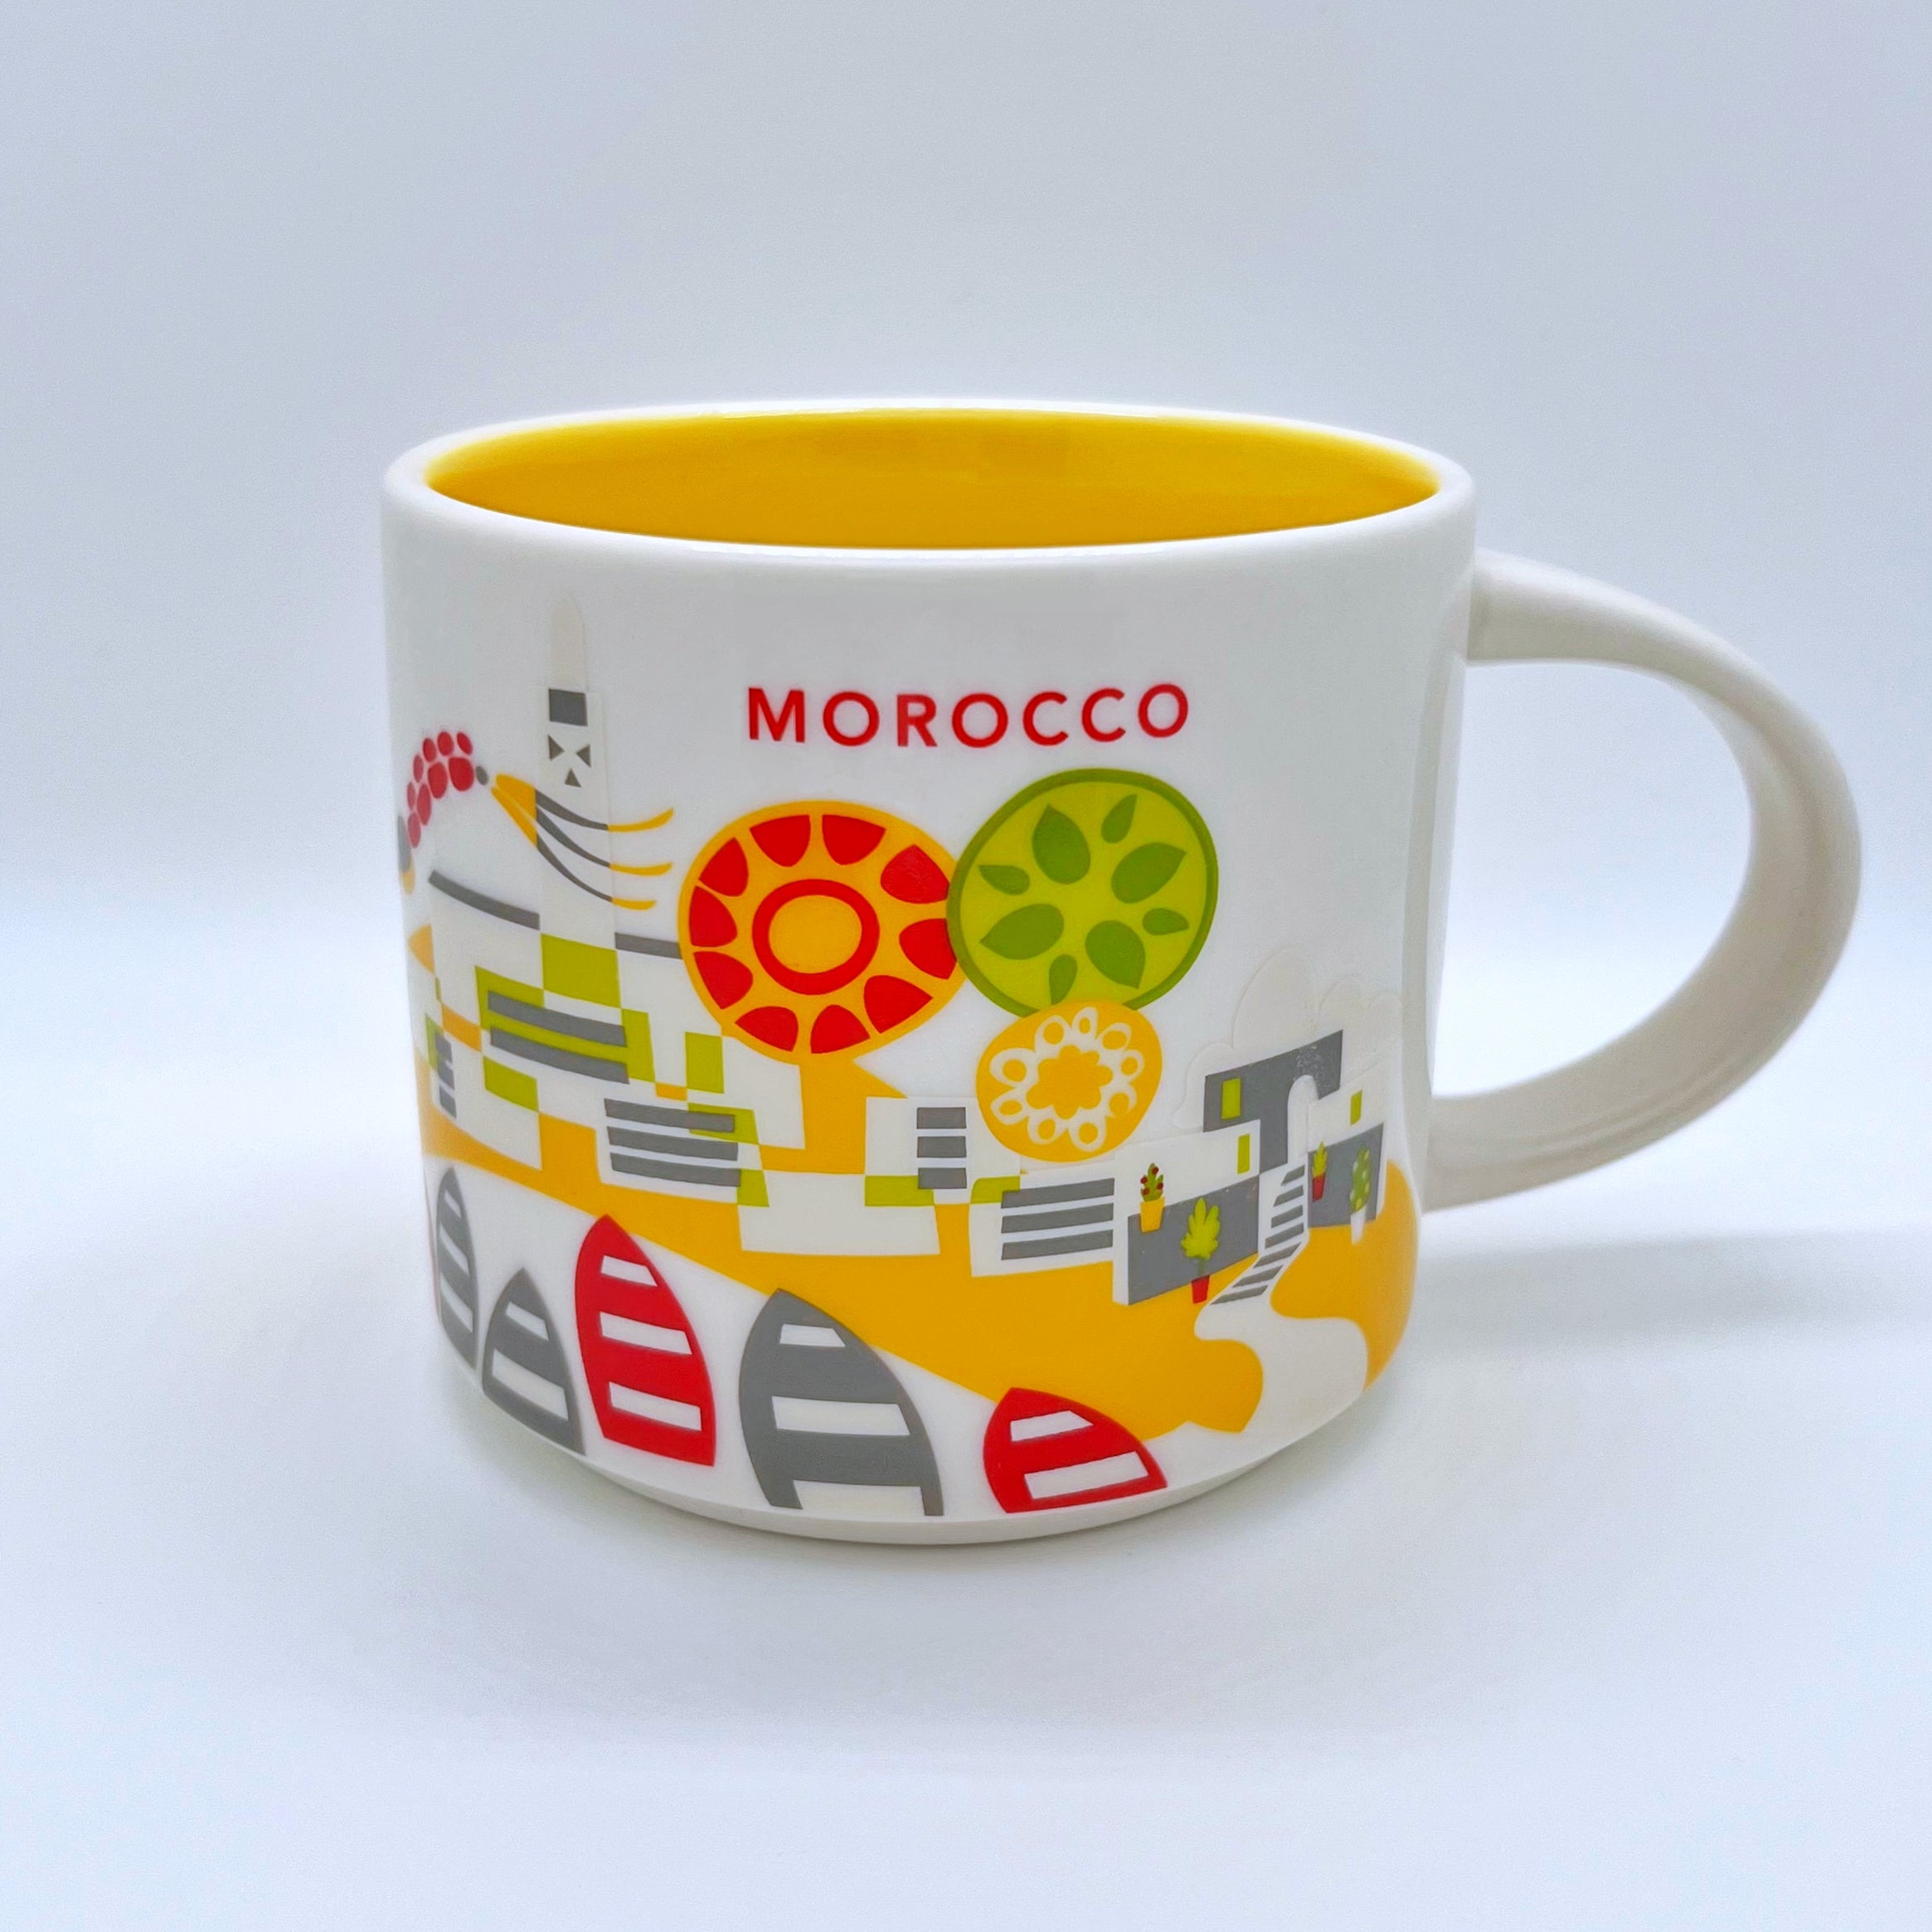 Morocco Country Kaffee Tasse